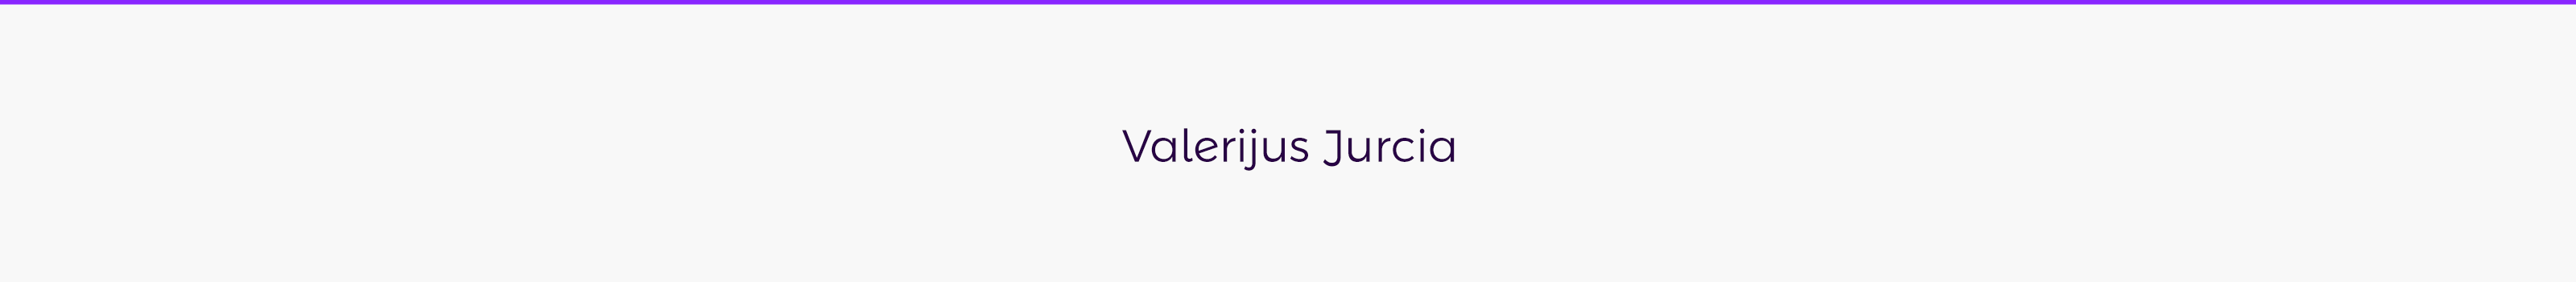 Valerijus Jurcia's profile banner